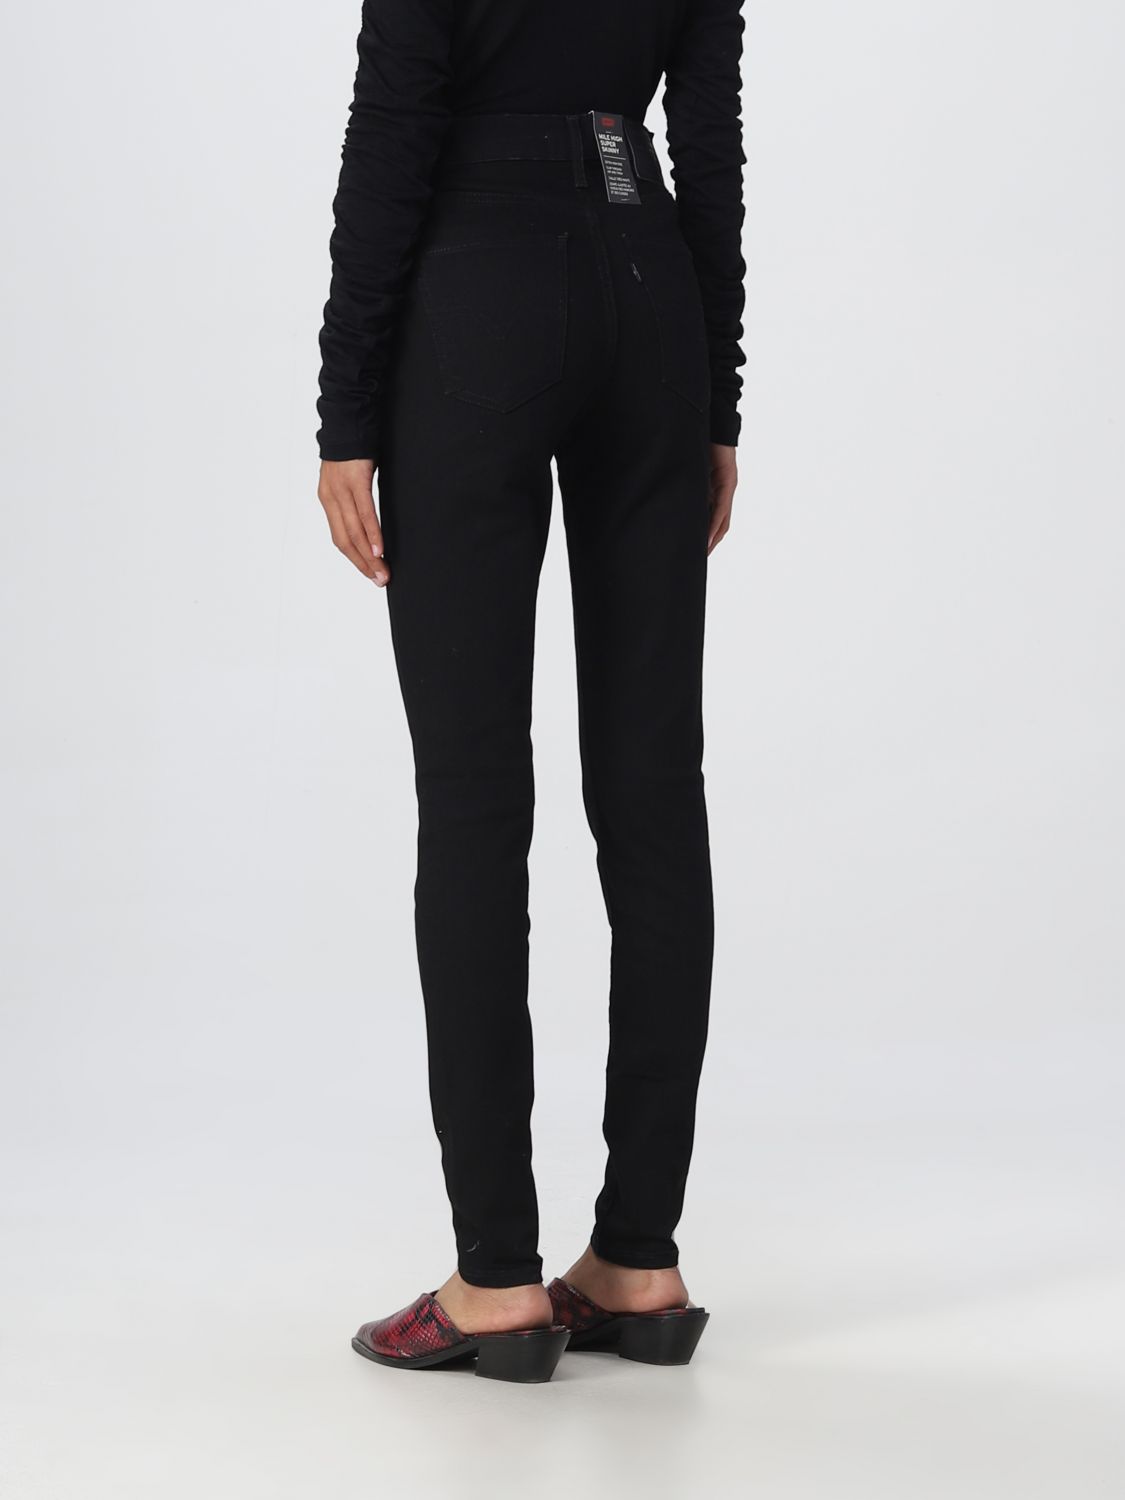 LEVI'S: jeans for woman - Black | Levi's jeans 227910052 online on ...